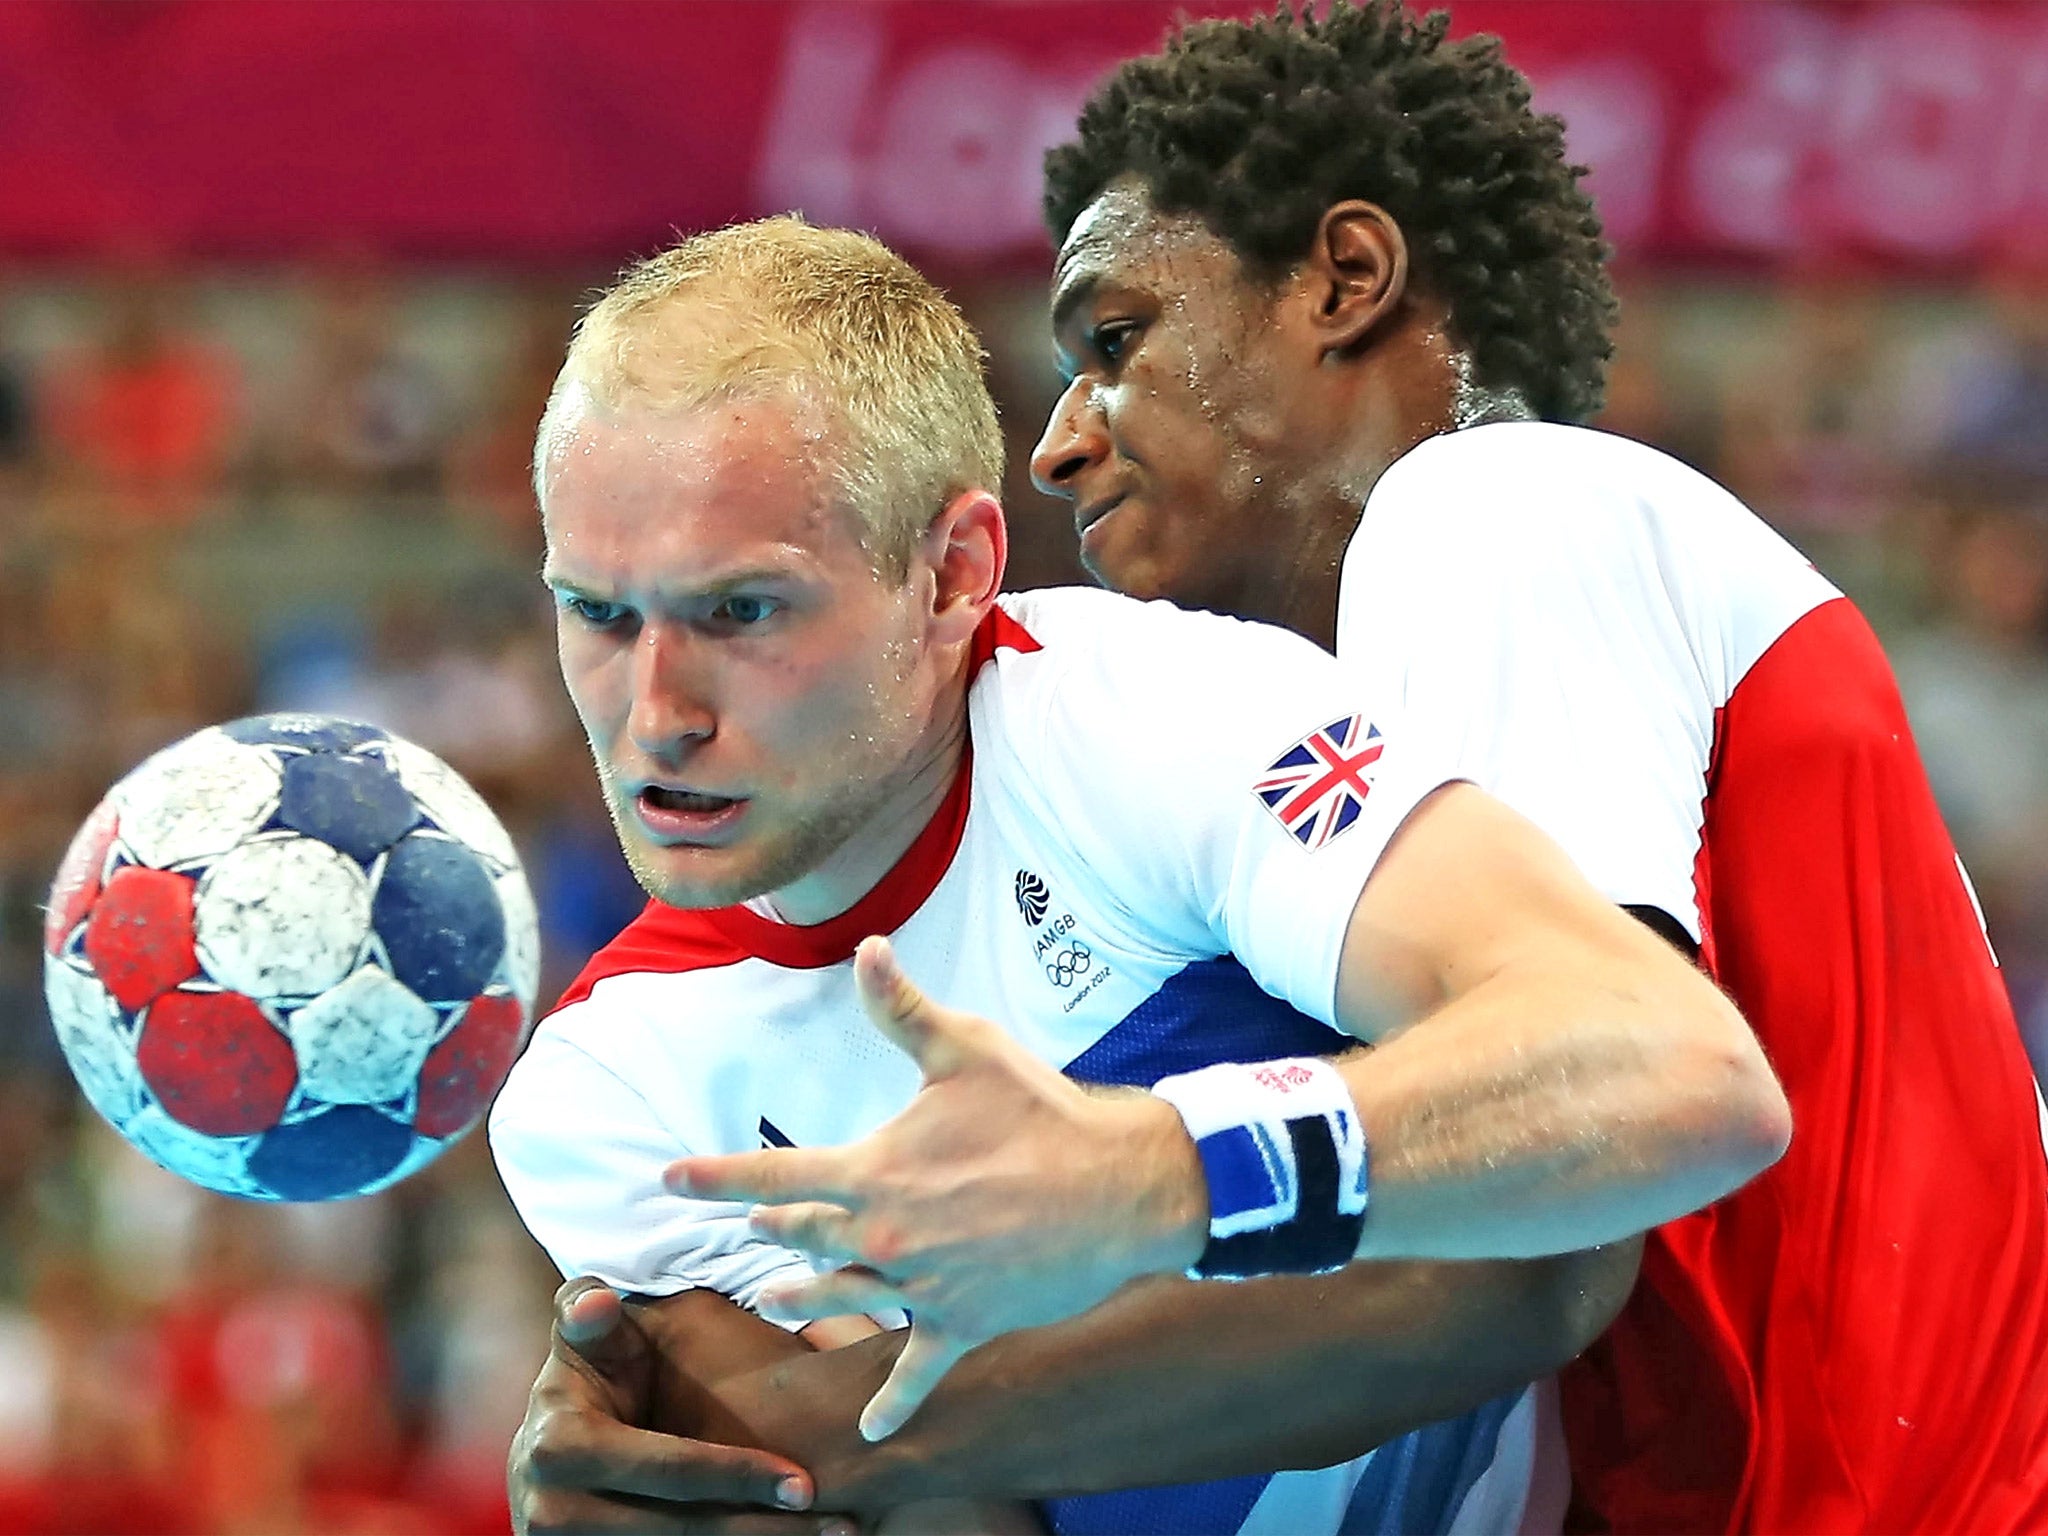 Handball could suffer funding cuts